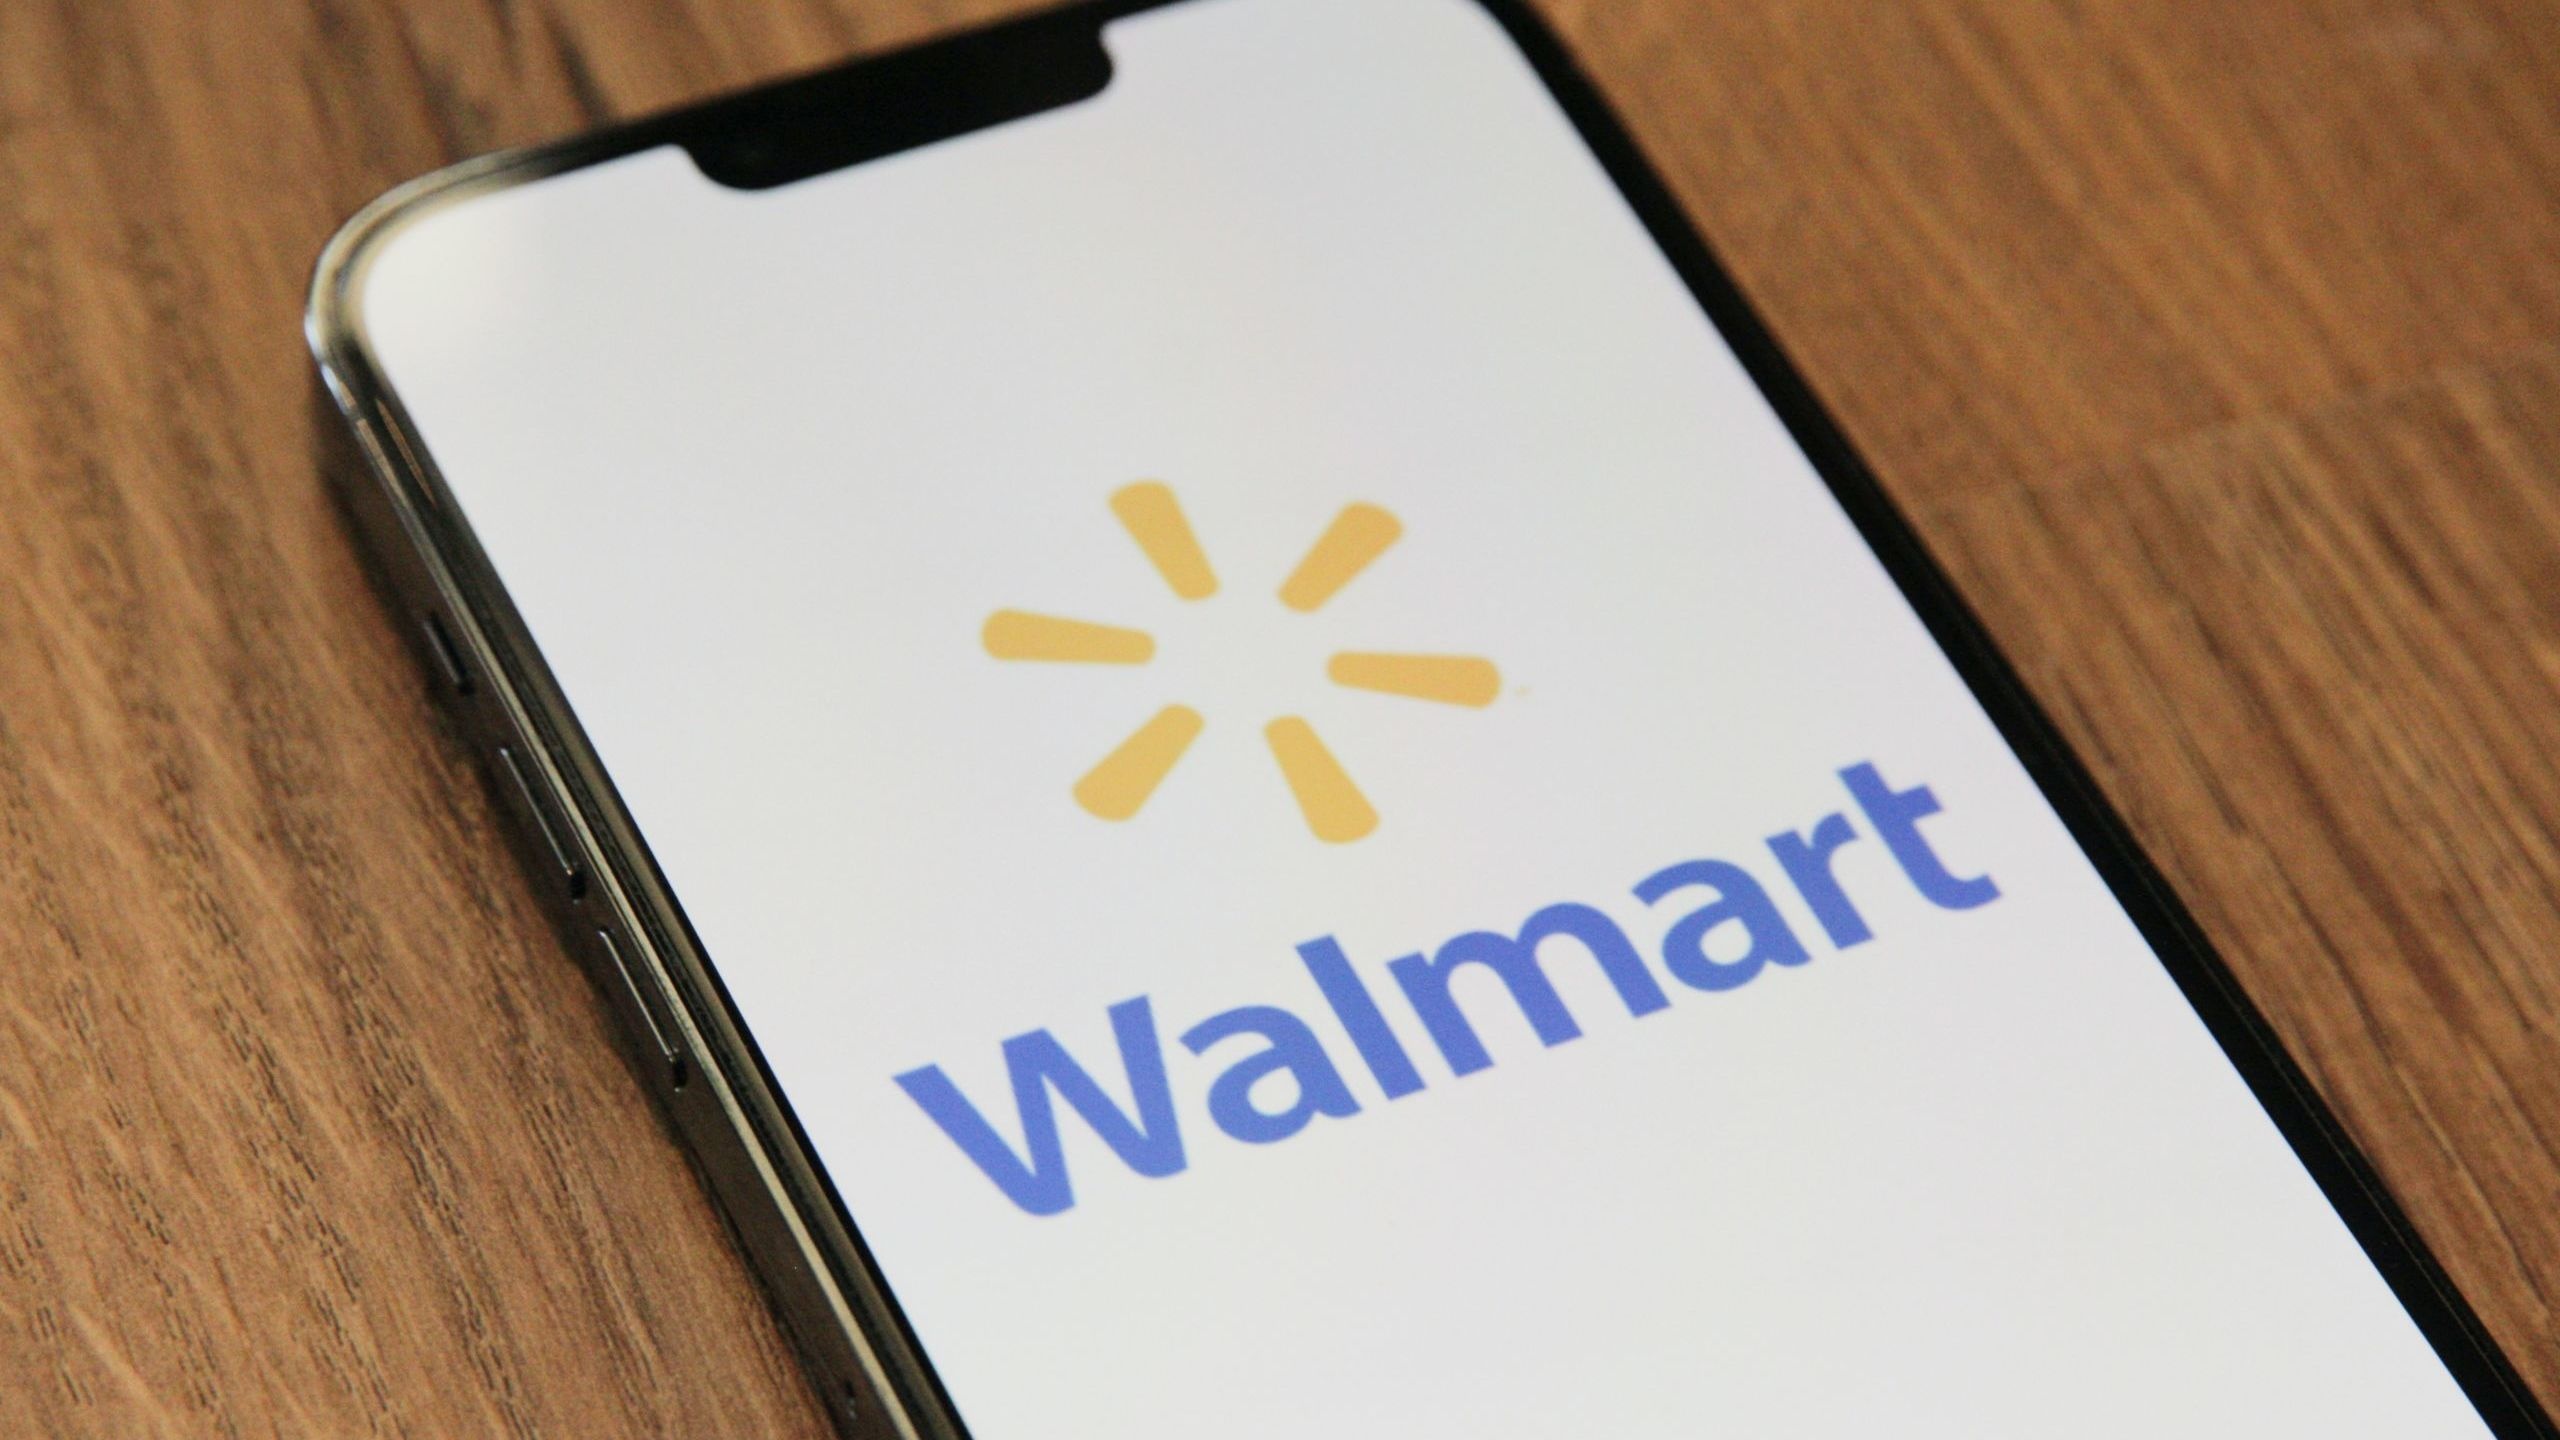 Walmart: E-Commerce, Mobile app, Retail and wholesale business. 2560x1440 HD Wallpaper.